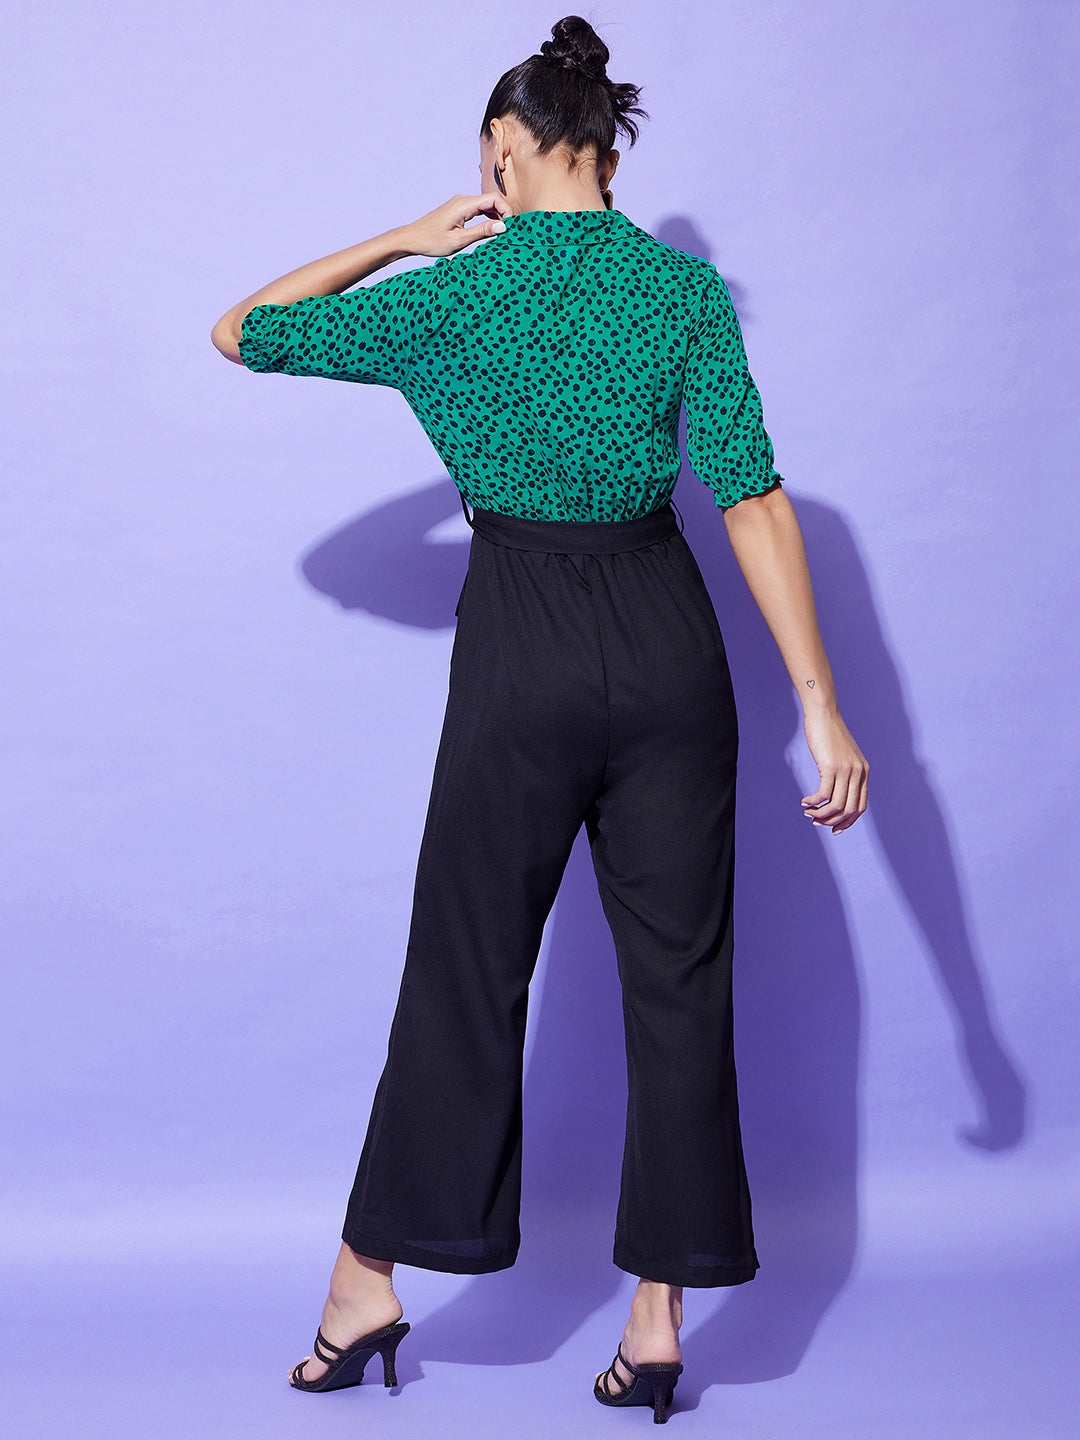 StyleStone Women's Black and Green Polka Dot Jumpsuit